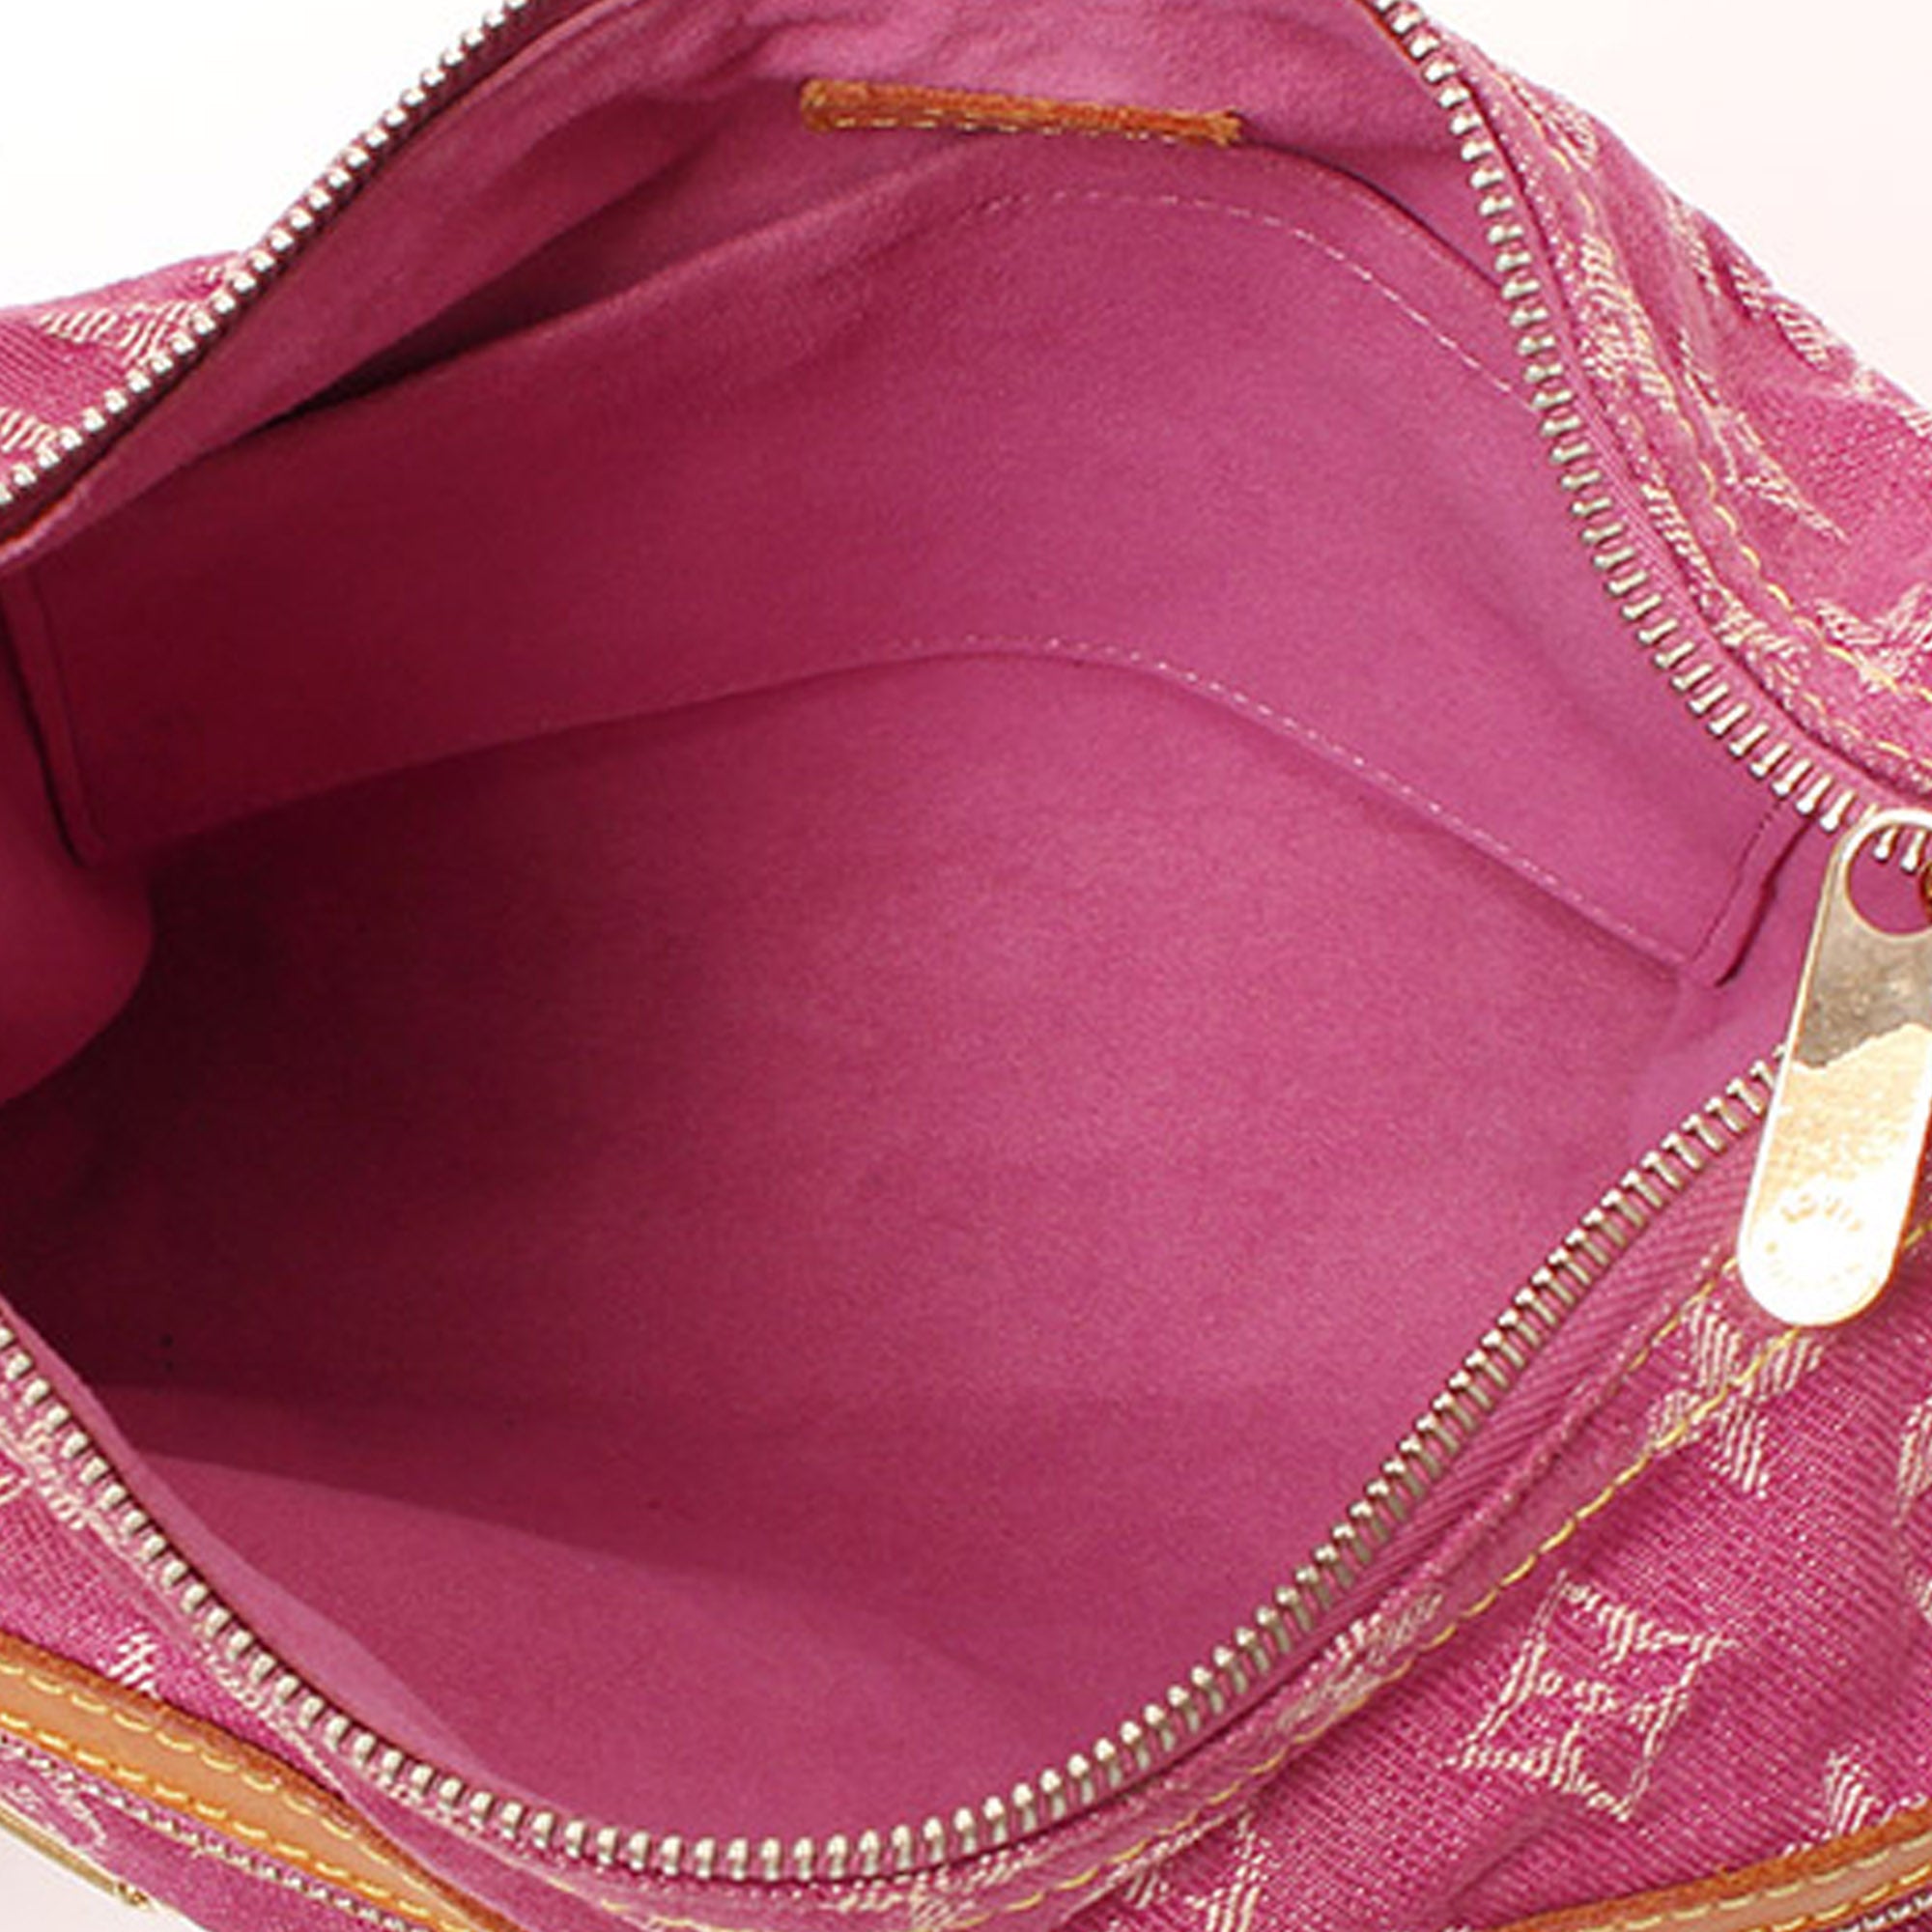 LOUIS VUITTON Baggy GM Shoulder Bag in Pink 2008